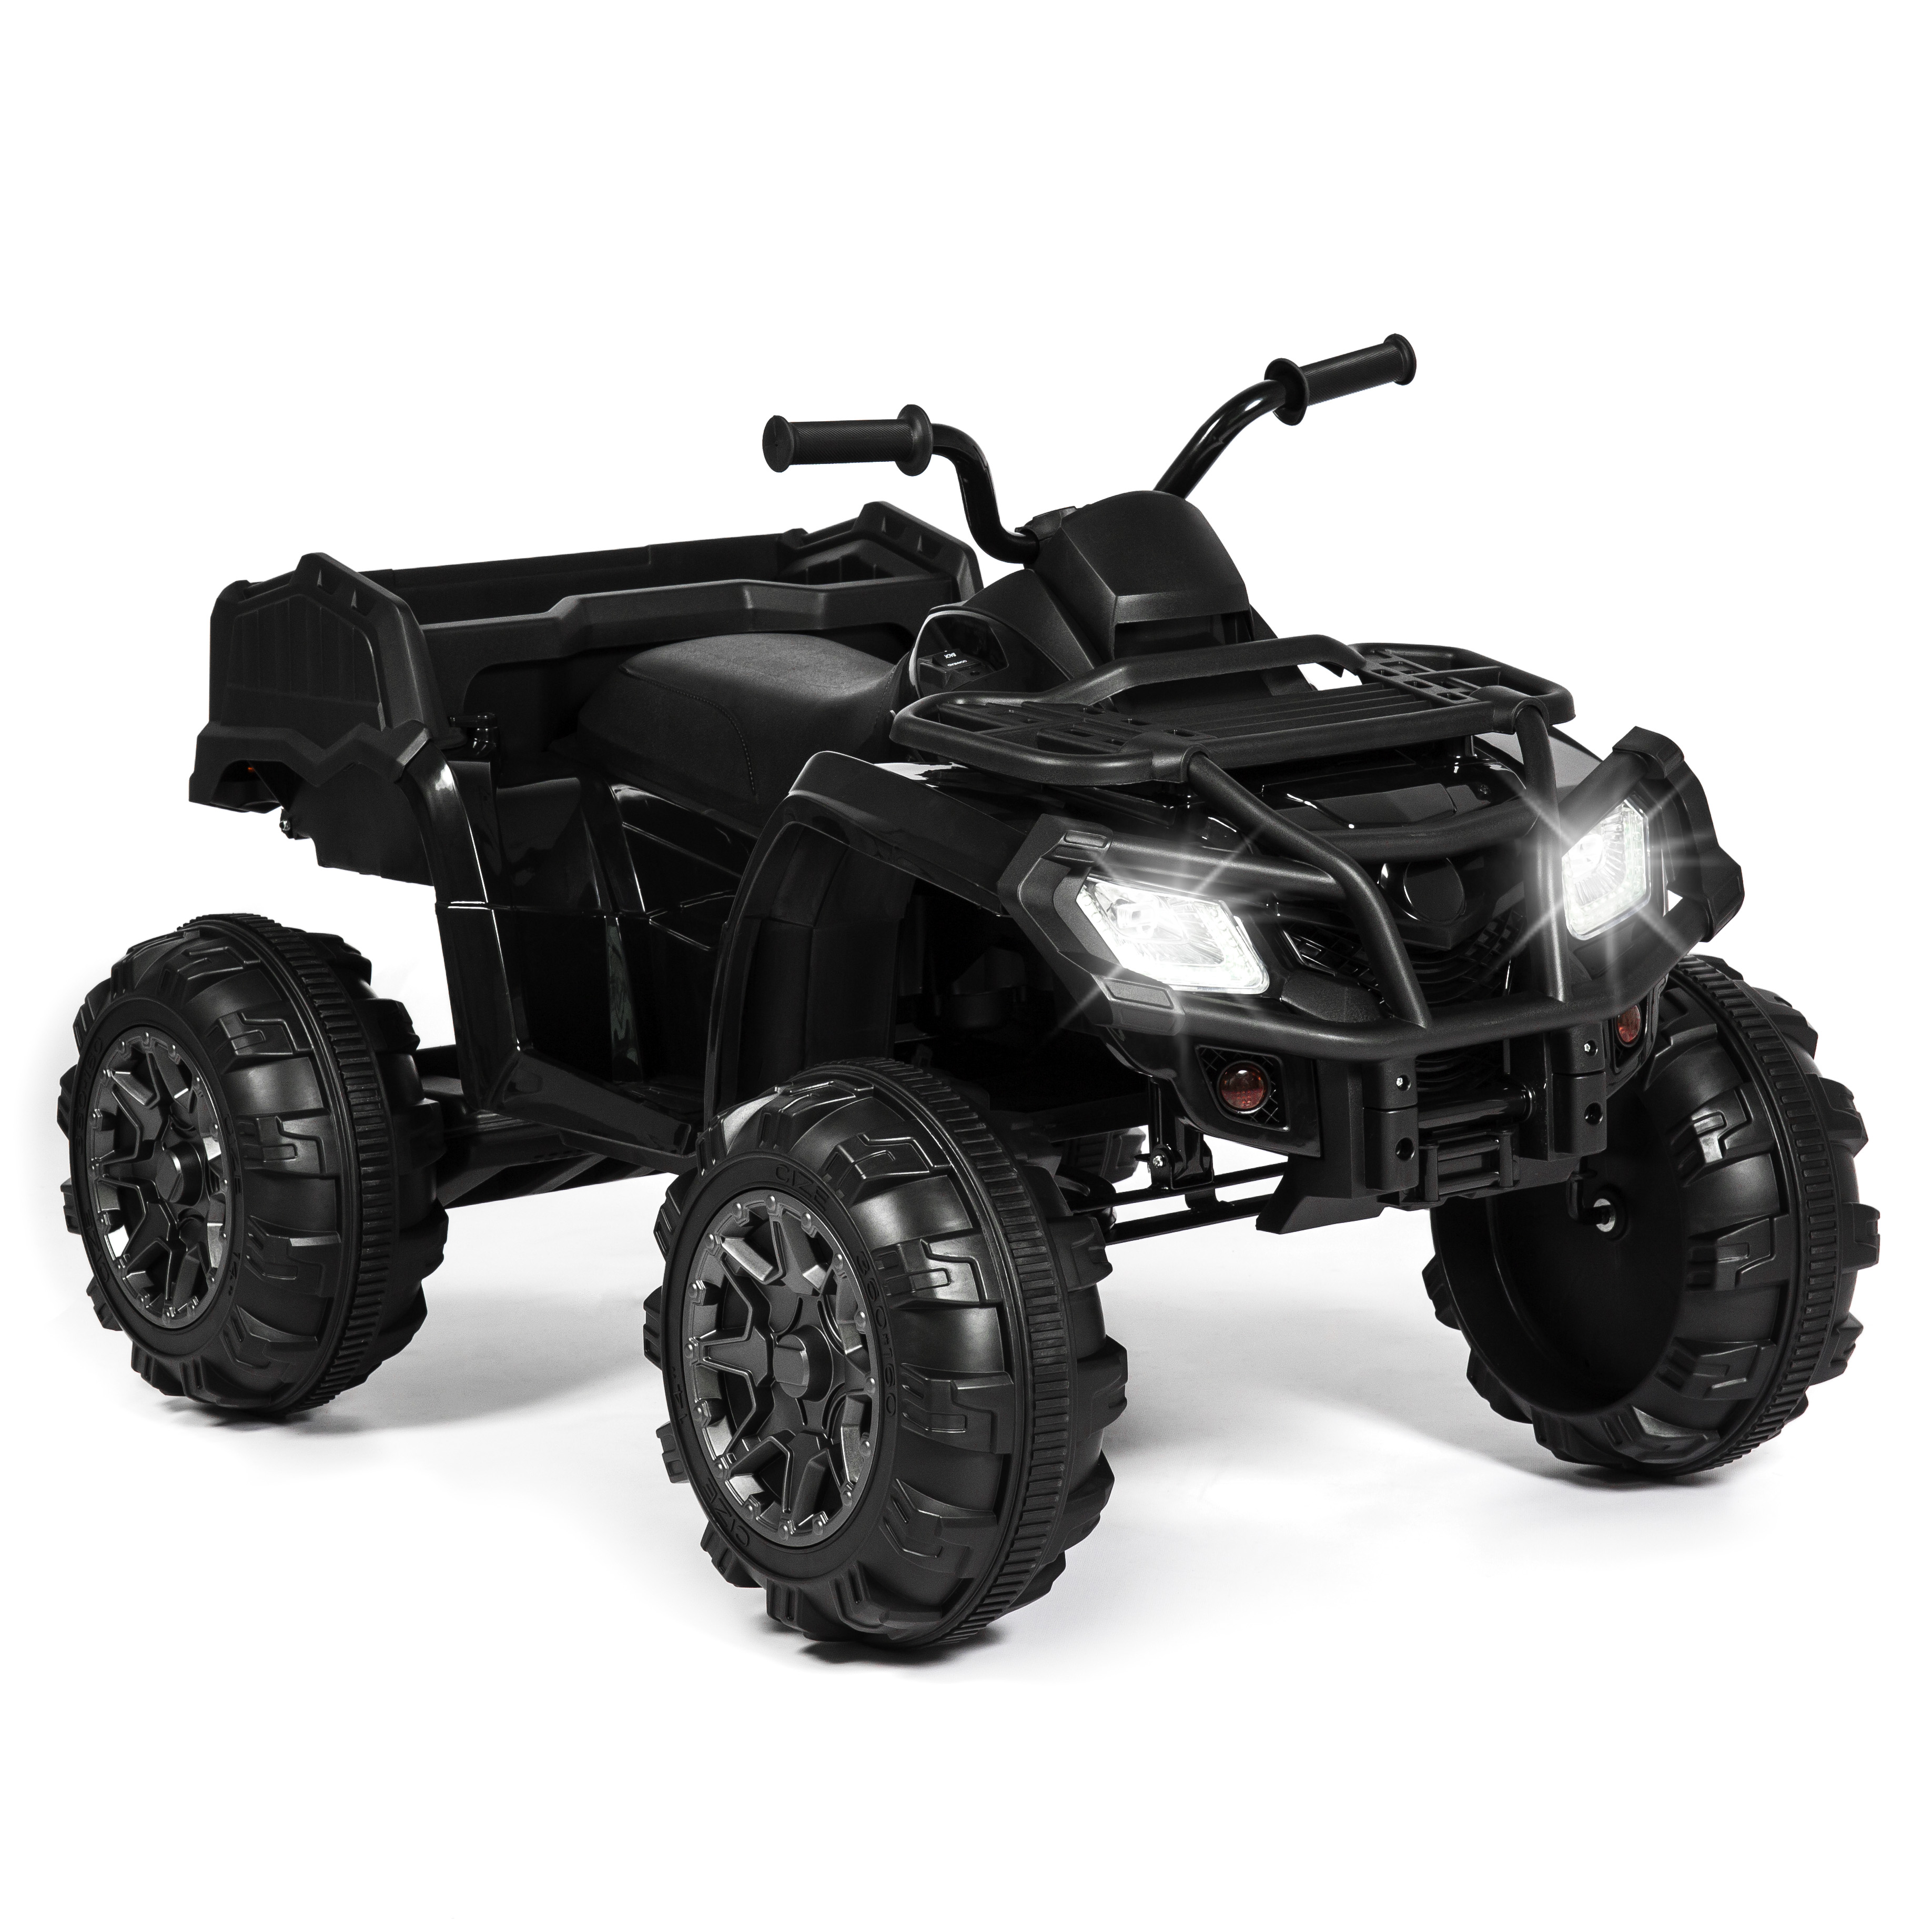 Best Choice Products 12V Kids Powered ATV Quad 4-Wheel Ride On Car w/ 2 Speeds, Spring Suspension, MP3, Storage - Black - image 1 of 8